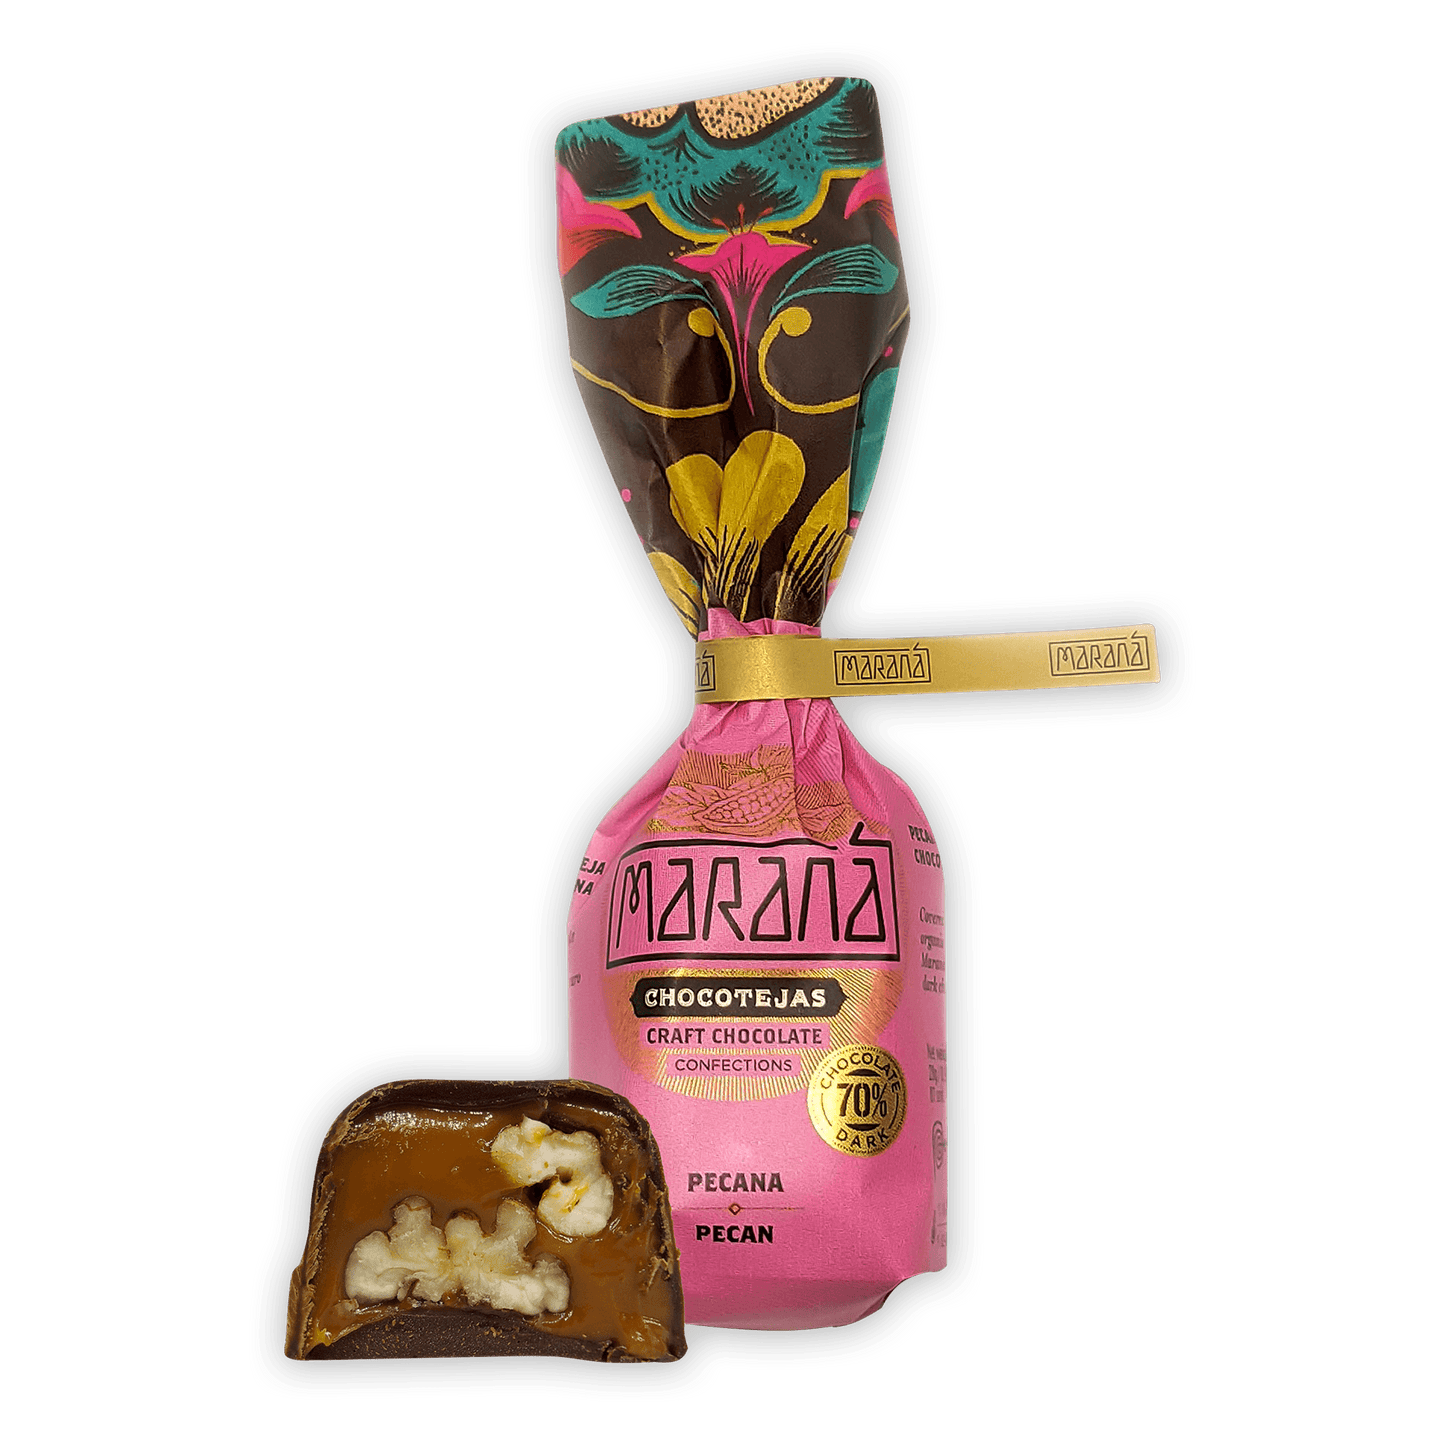 Bonnat Madre de Dios, Peru - Choc Exchange Craft Chocolate Bars, Gifts,  Boxes